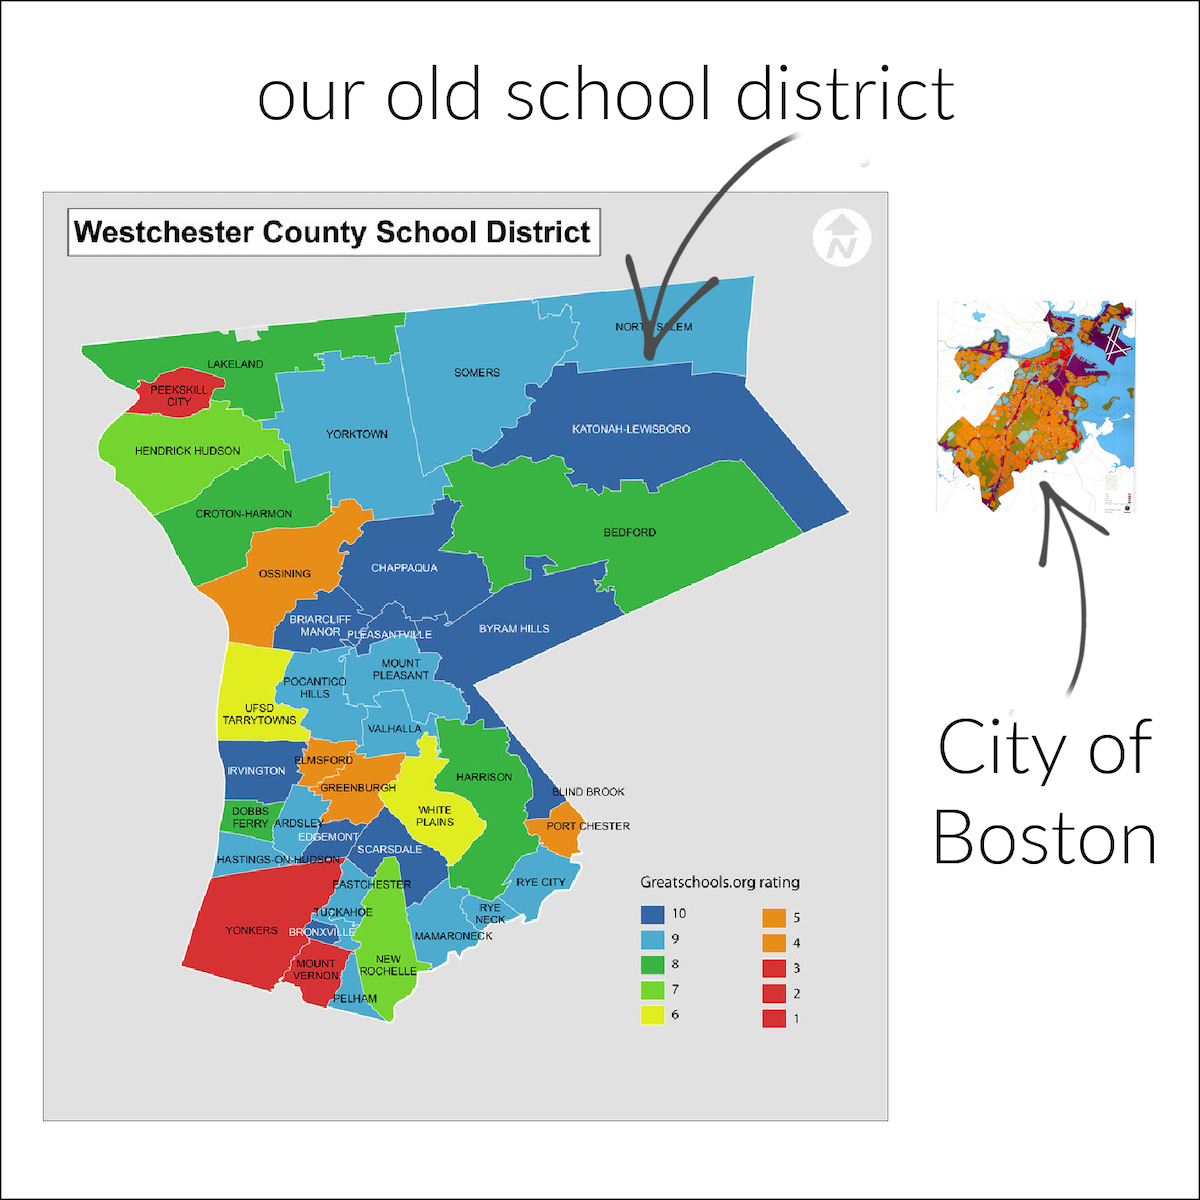 boston and katonah lewisboro school district